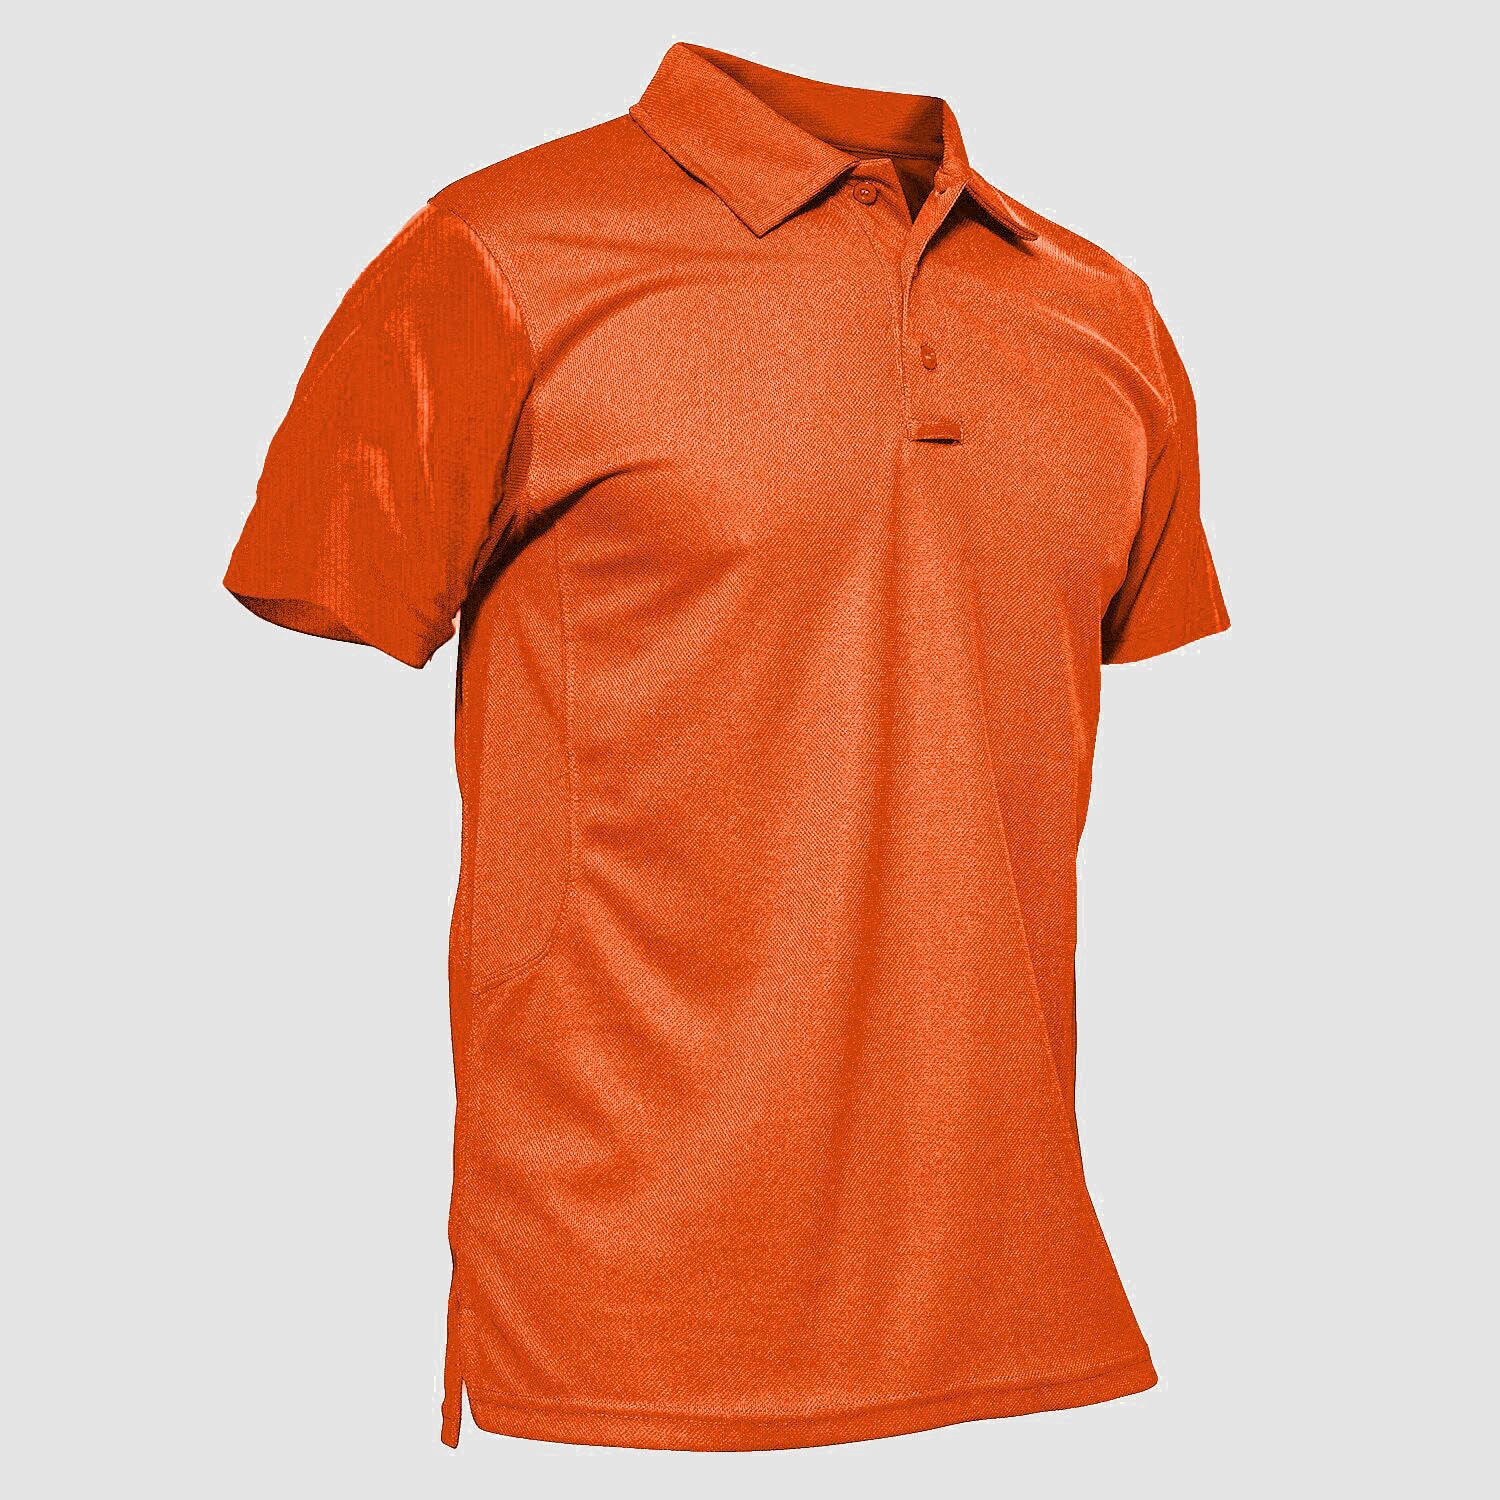 MLANM Men's Short Sleeve Polo Shirts 1/4 Zip Quick Dry Golf Polo